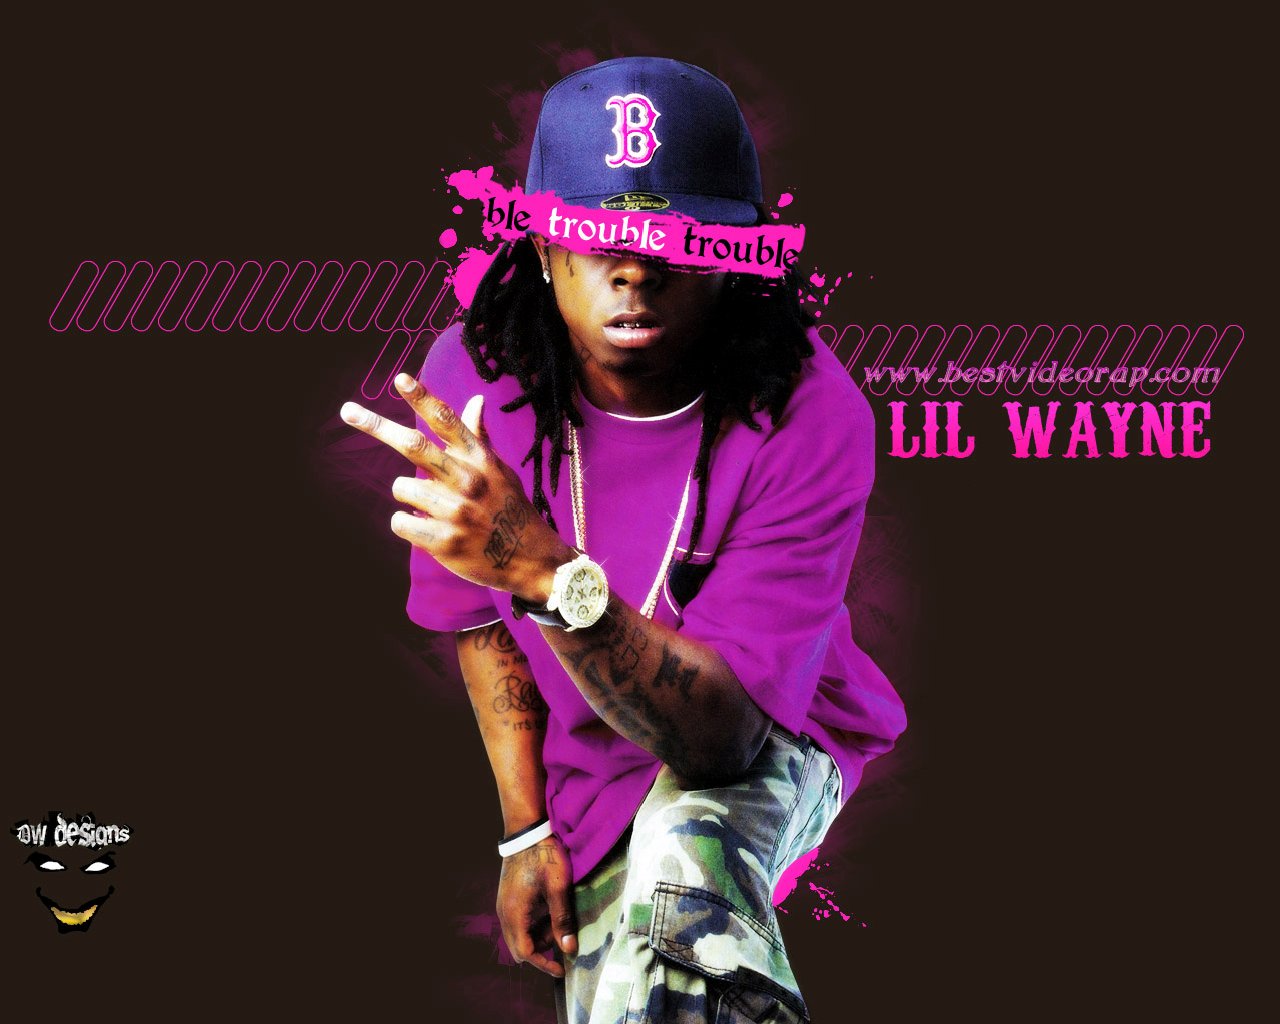 Lil Wayne Wallpapers | Download Video Hip-Hop Free 2010